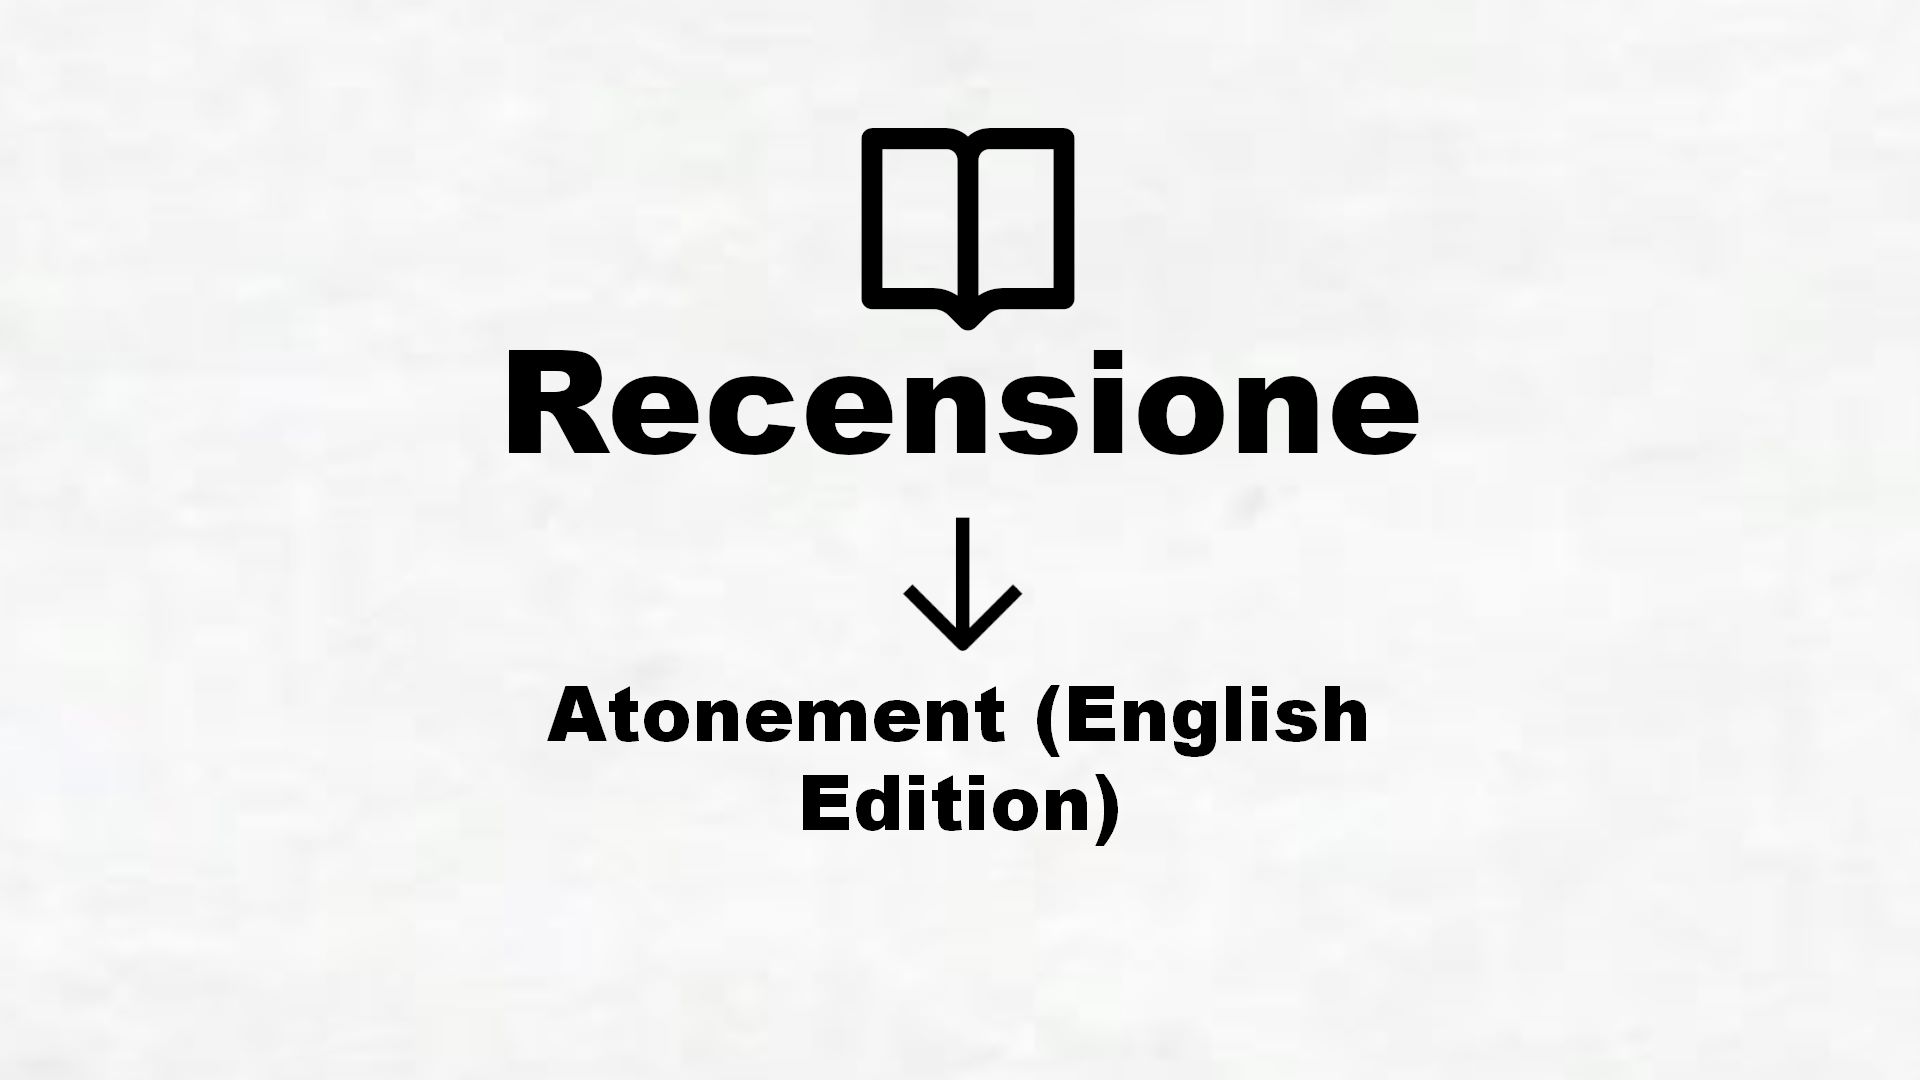 Atonement (English Edition) – Recensione Libro